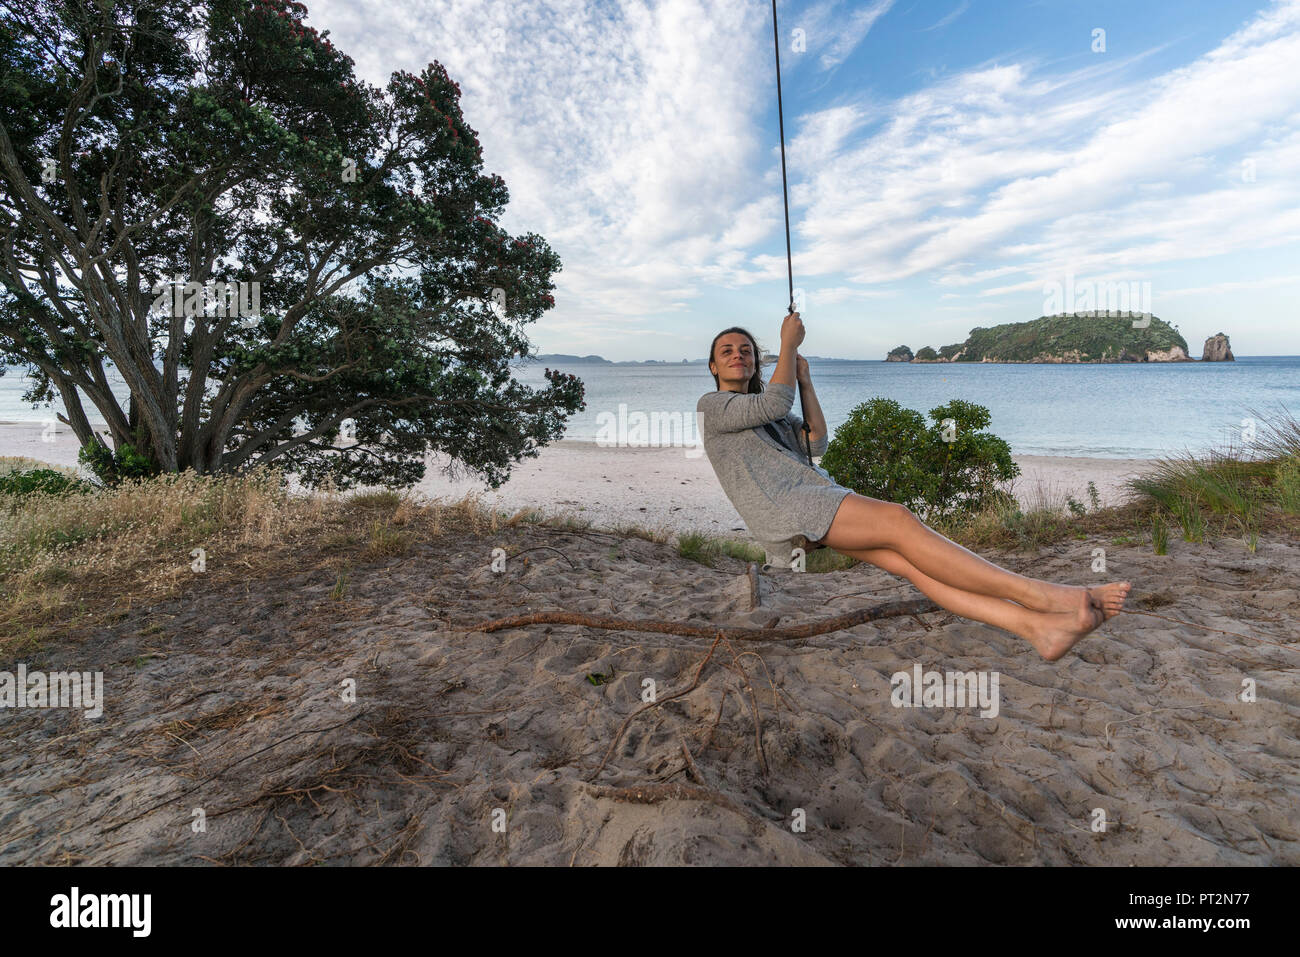 Young woman rope swinging on the beach and Te Karaka island in the background, Hahei, Waikato region, North Island, New Zealand, Stock Photo